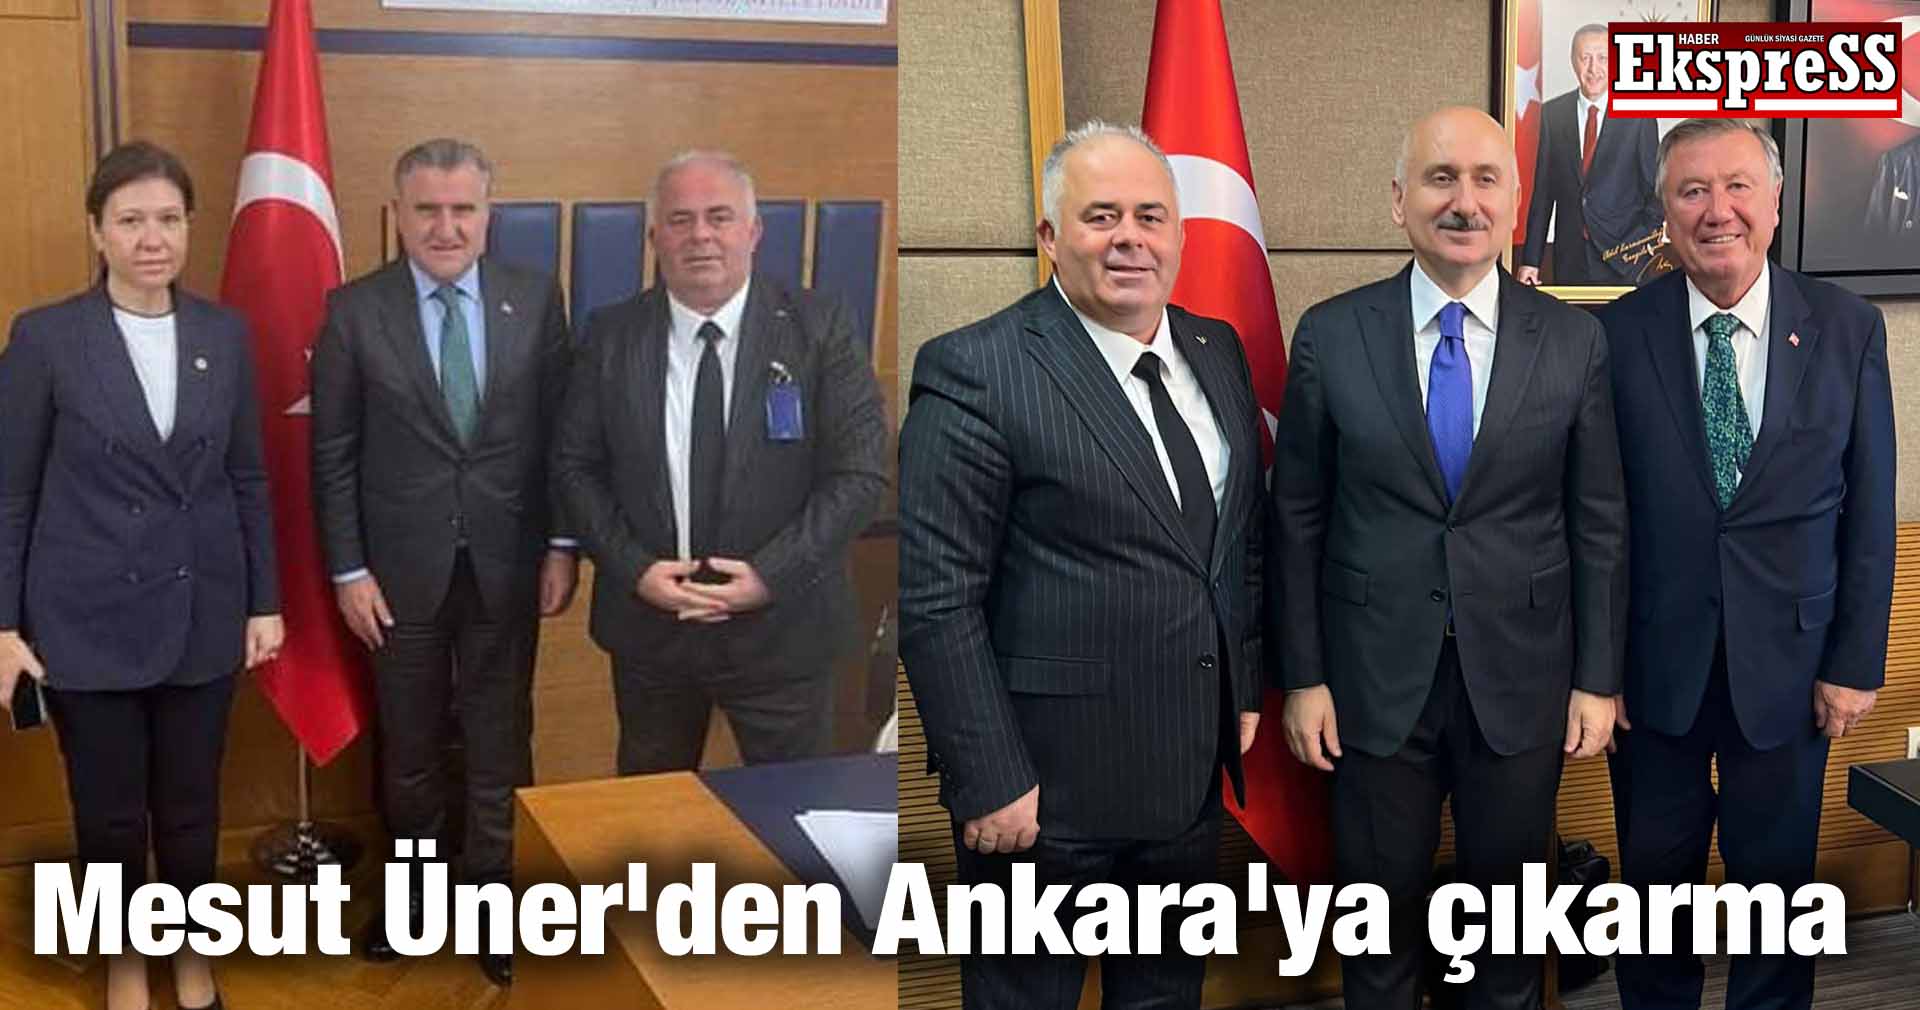 Mesut Üner’den Ankara’ya çıkarma